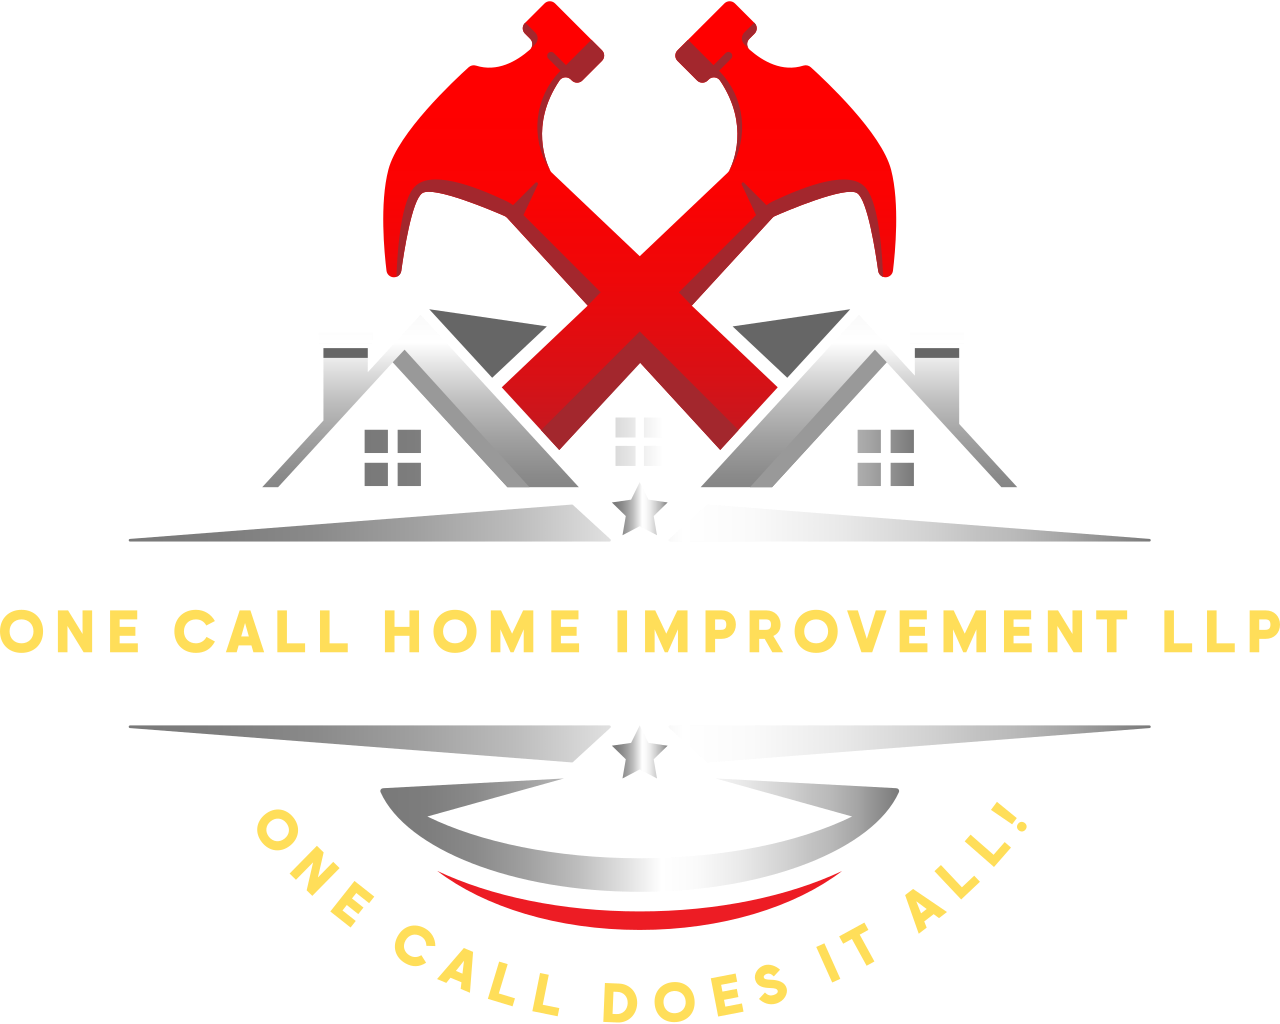 One Call Home Improvement LLP's logo